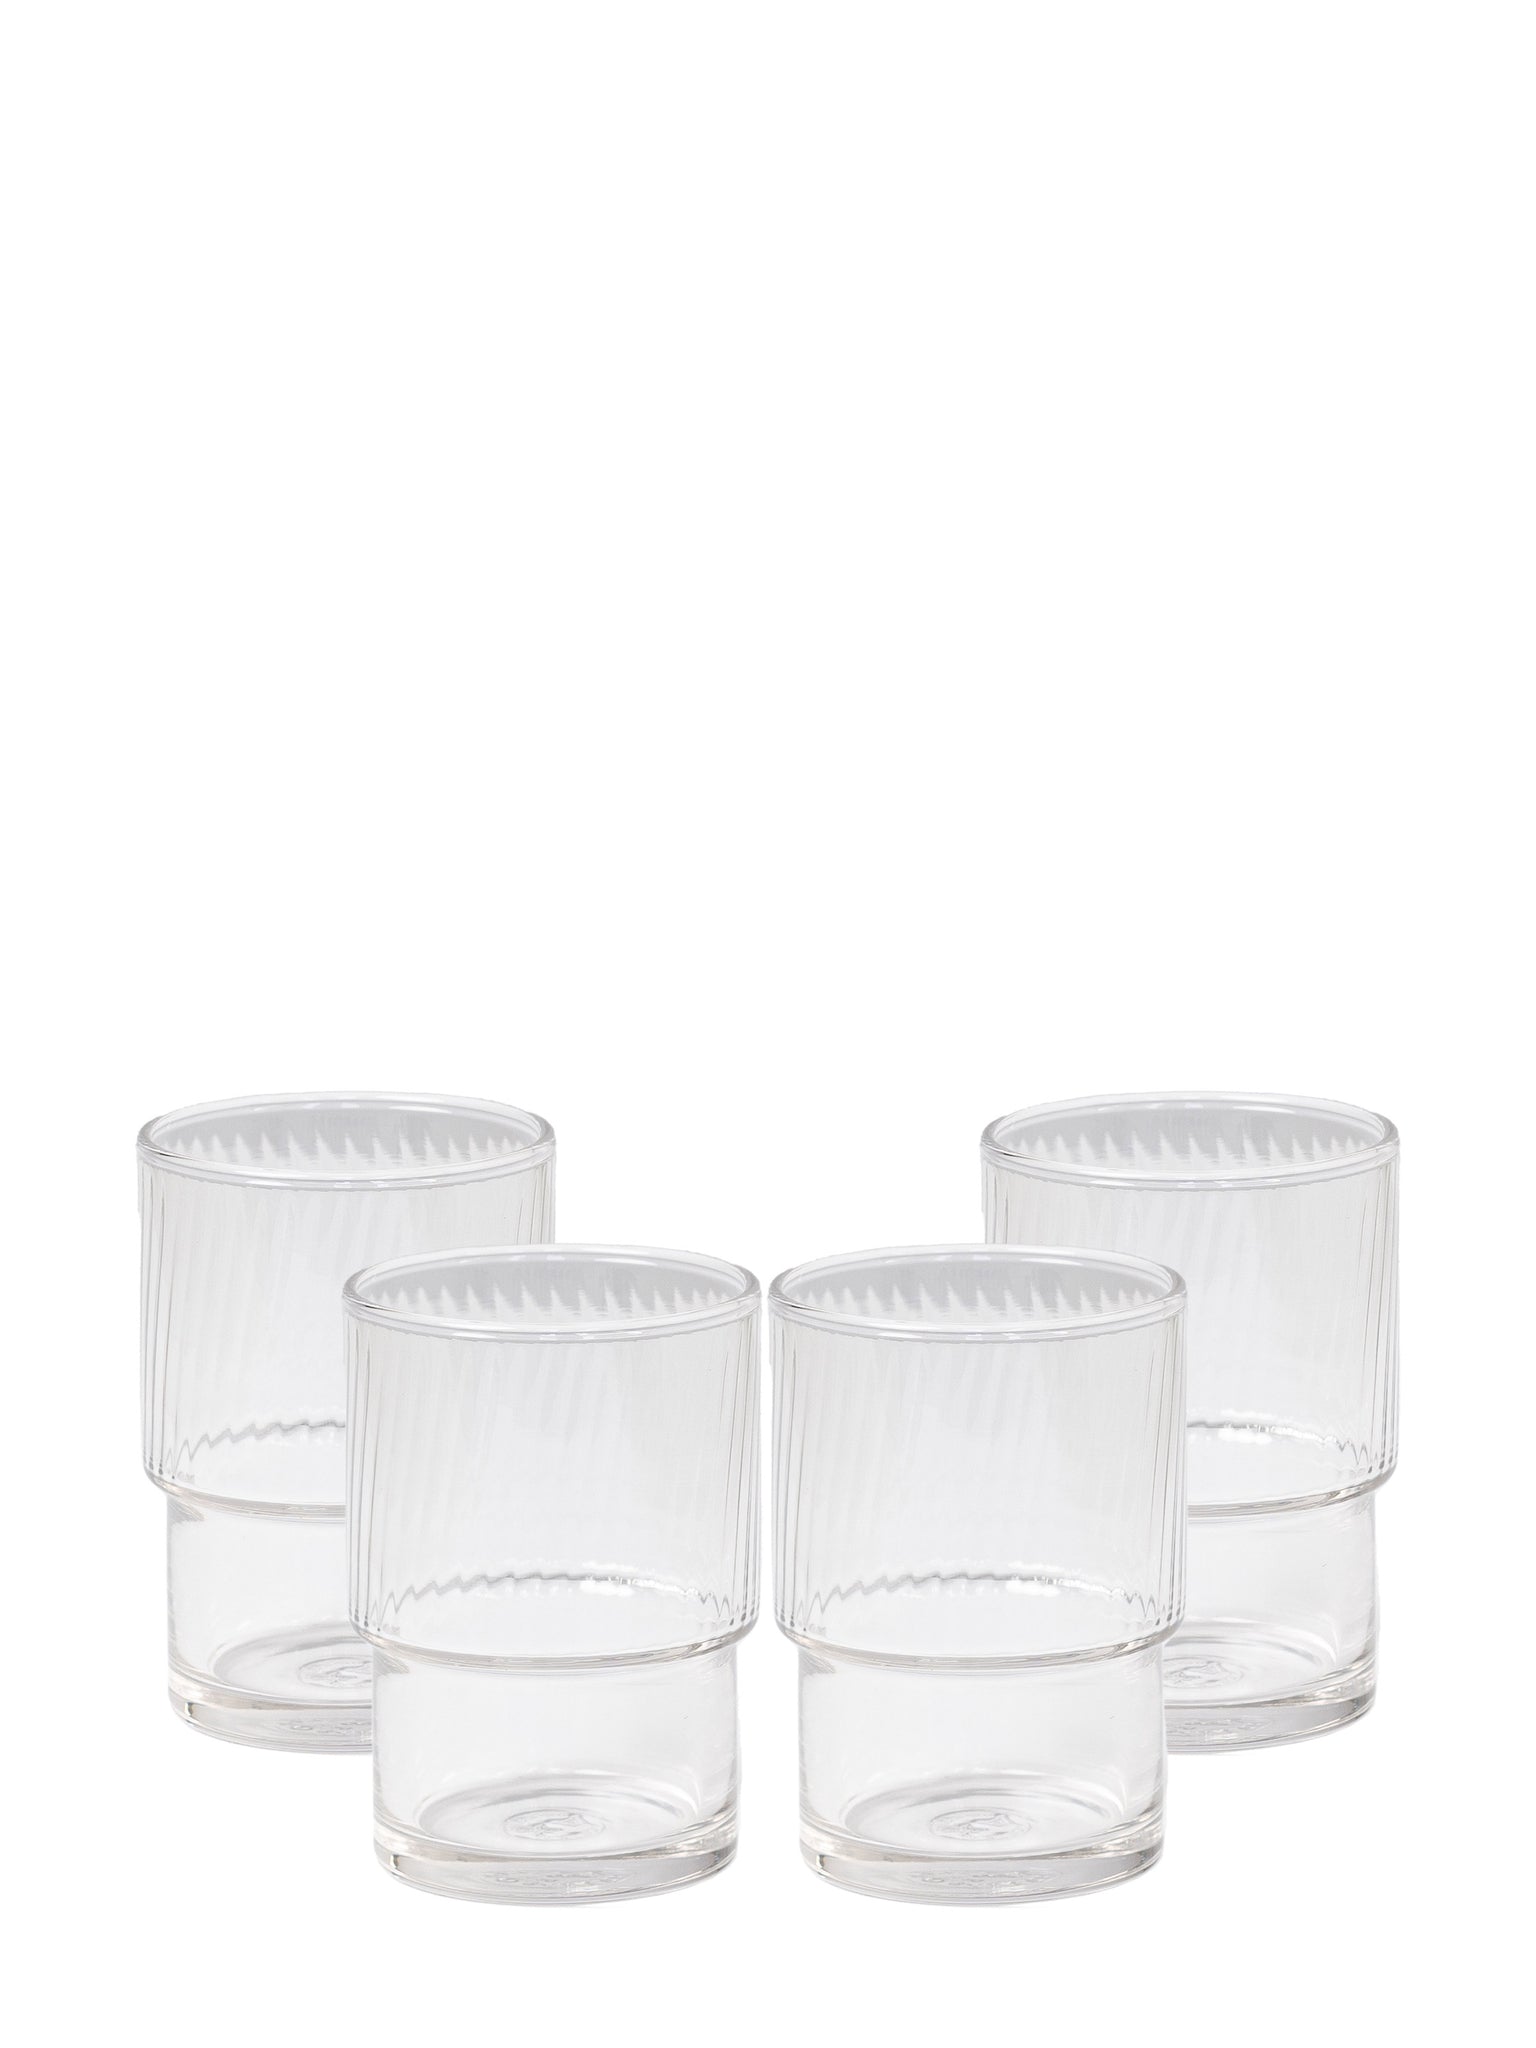 medium Japanese stacking glass by Ishizuka Glass